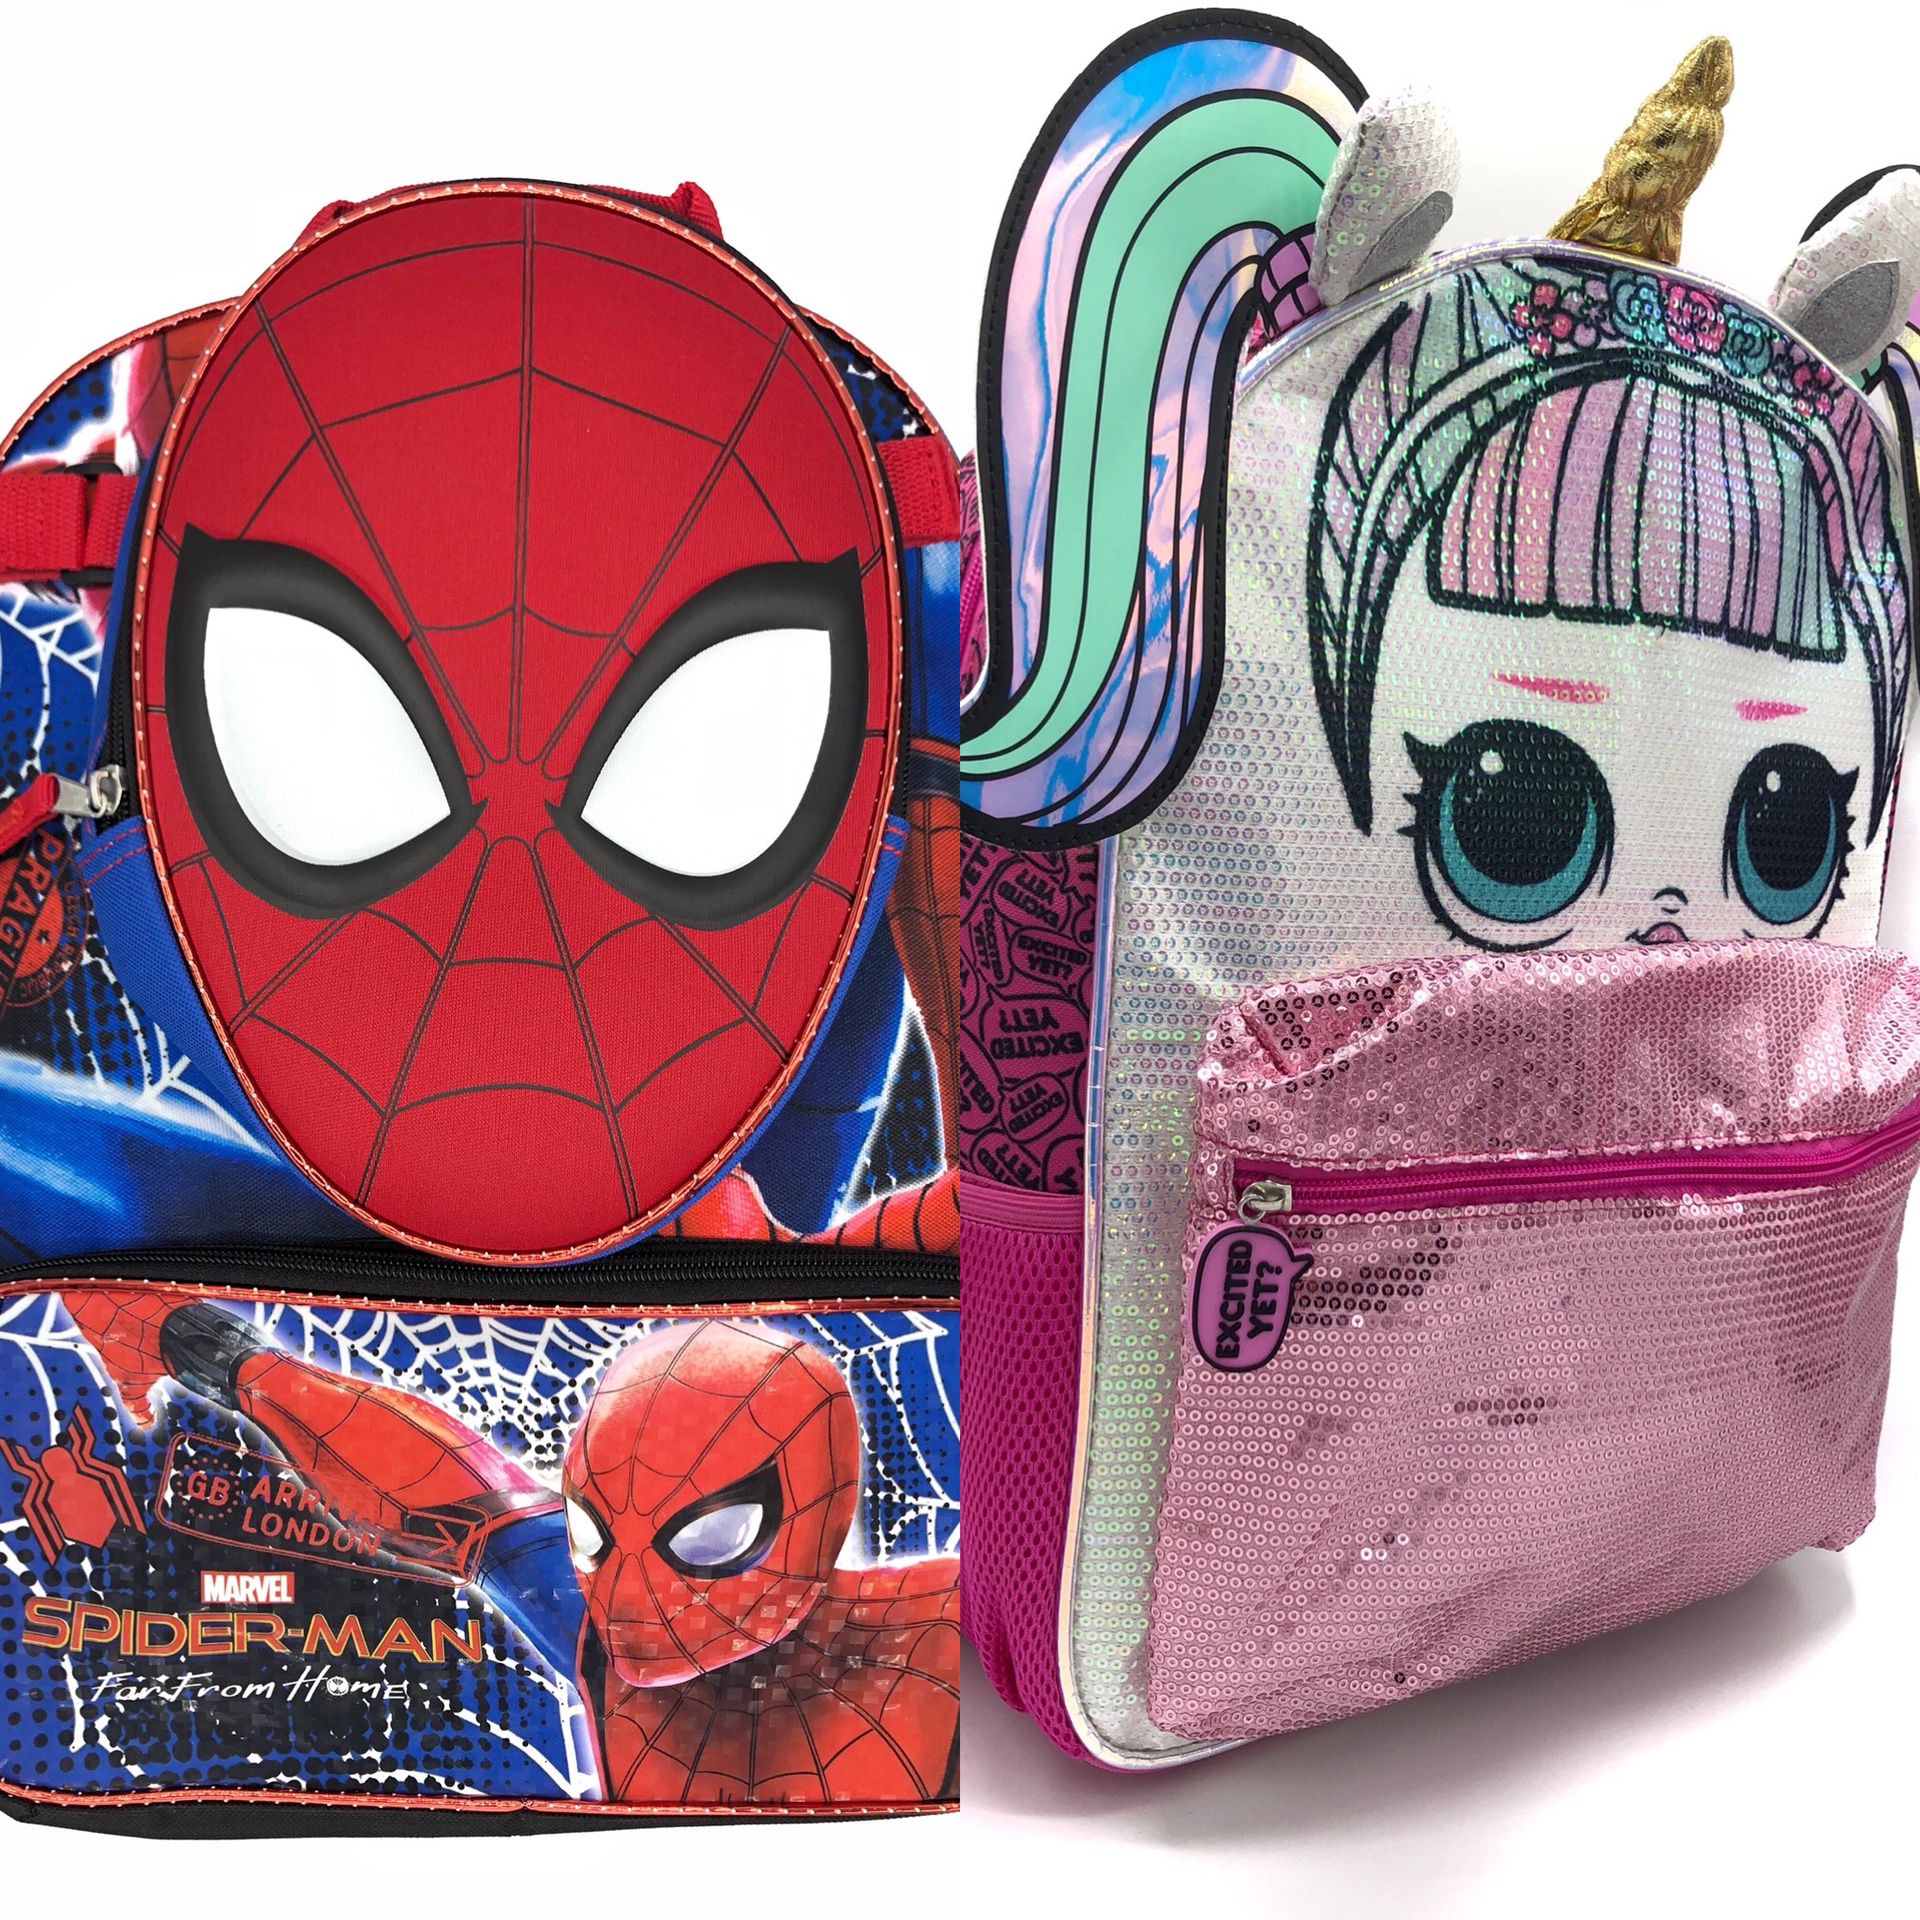 NEW! LOL Surprise Dolls & 2 piece spiderman backpack set